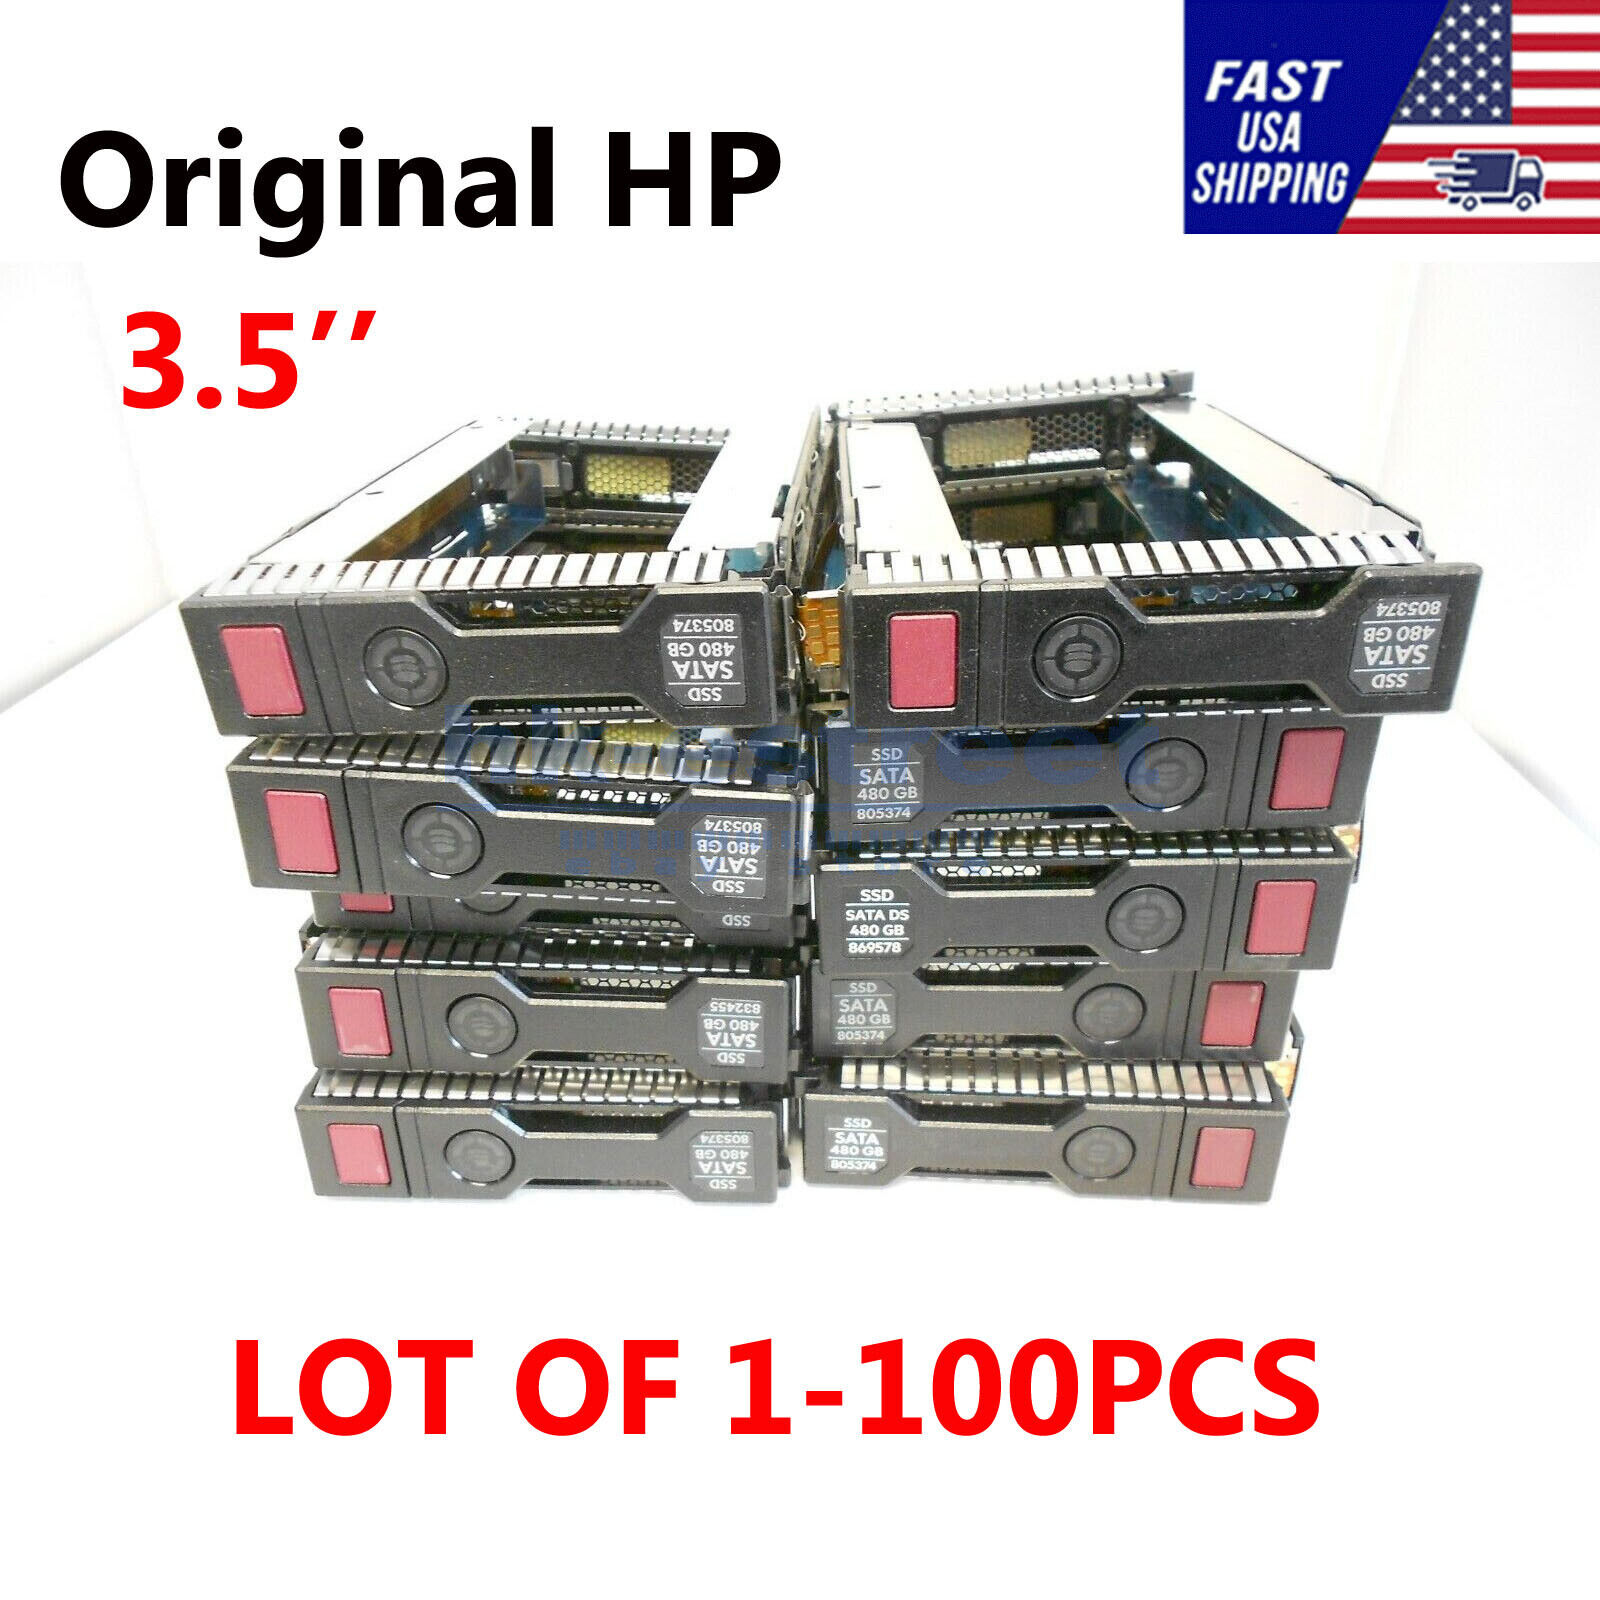 LOT 1-100PCS HP 3.5